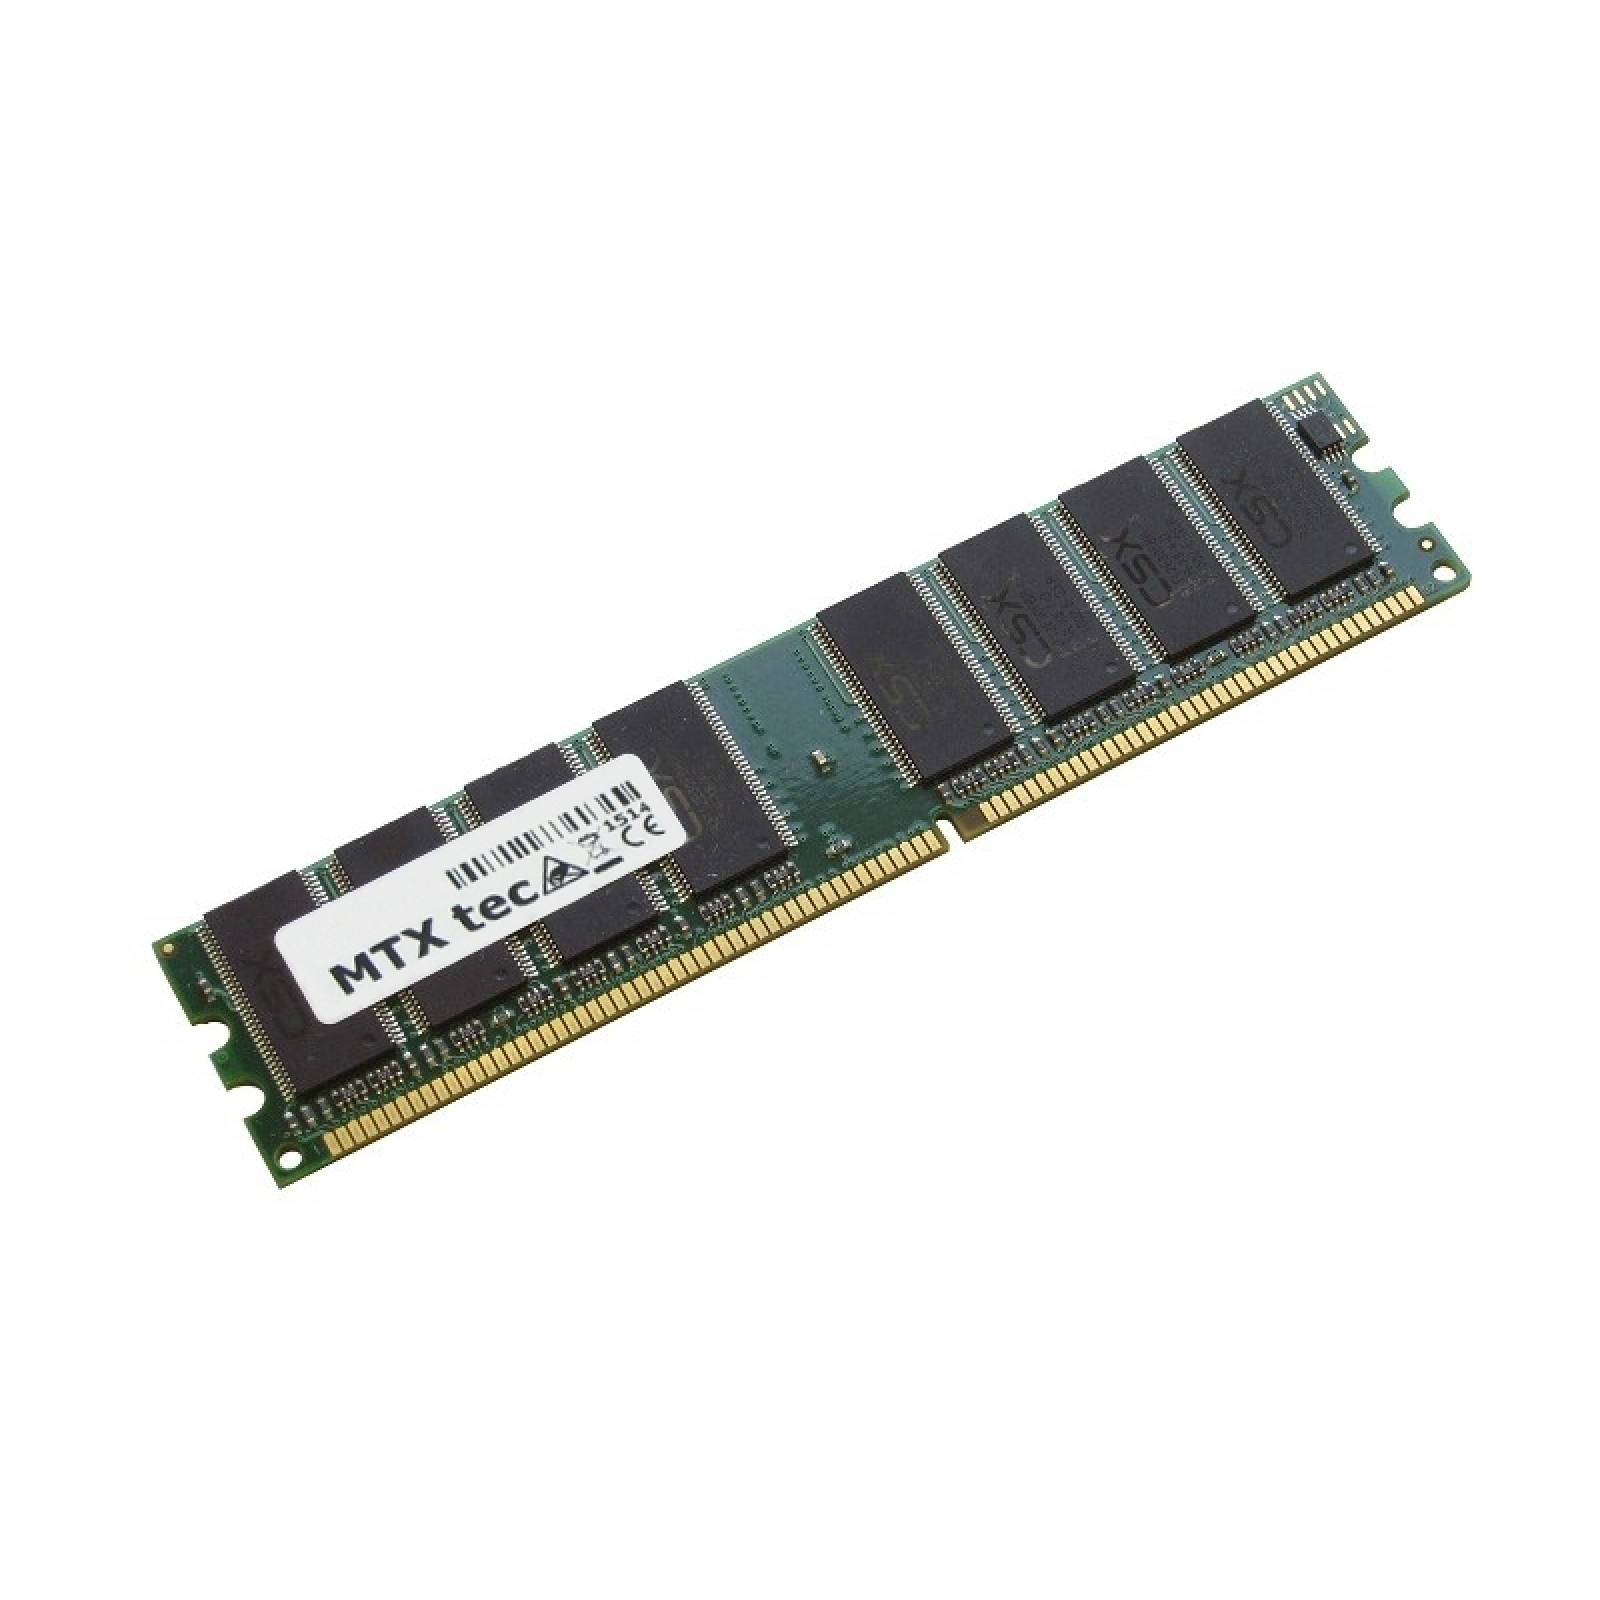 UNIWILL Arbeitsspeicher N755ii7 GB RAM für MTXTEC 1 1 DDR Notebook-Speicher 755ii7, GB